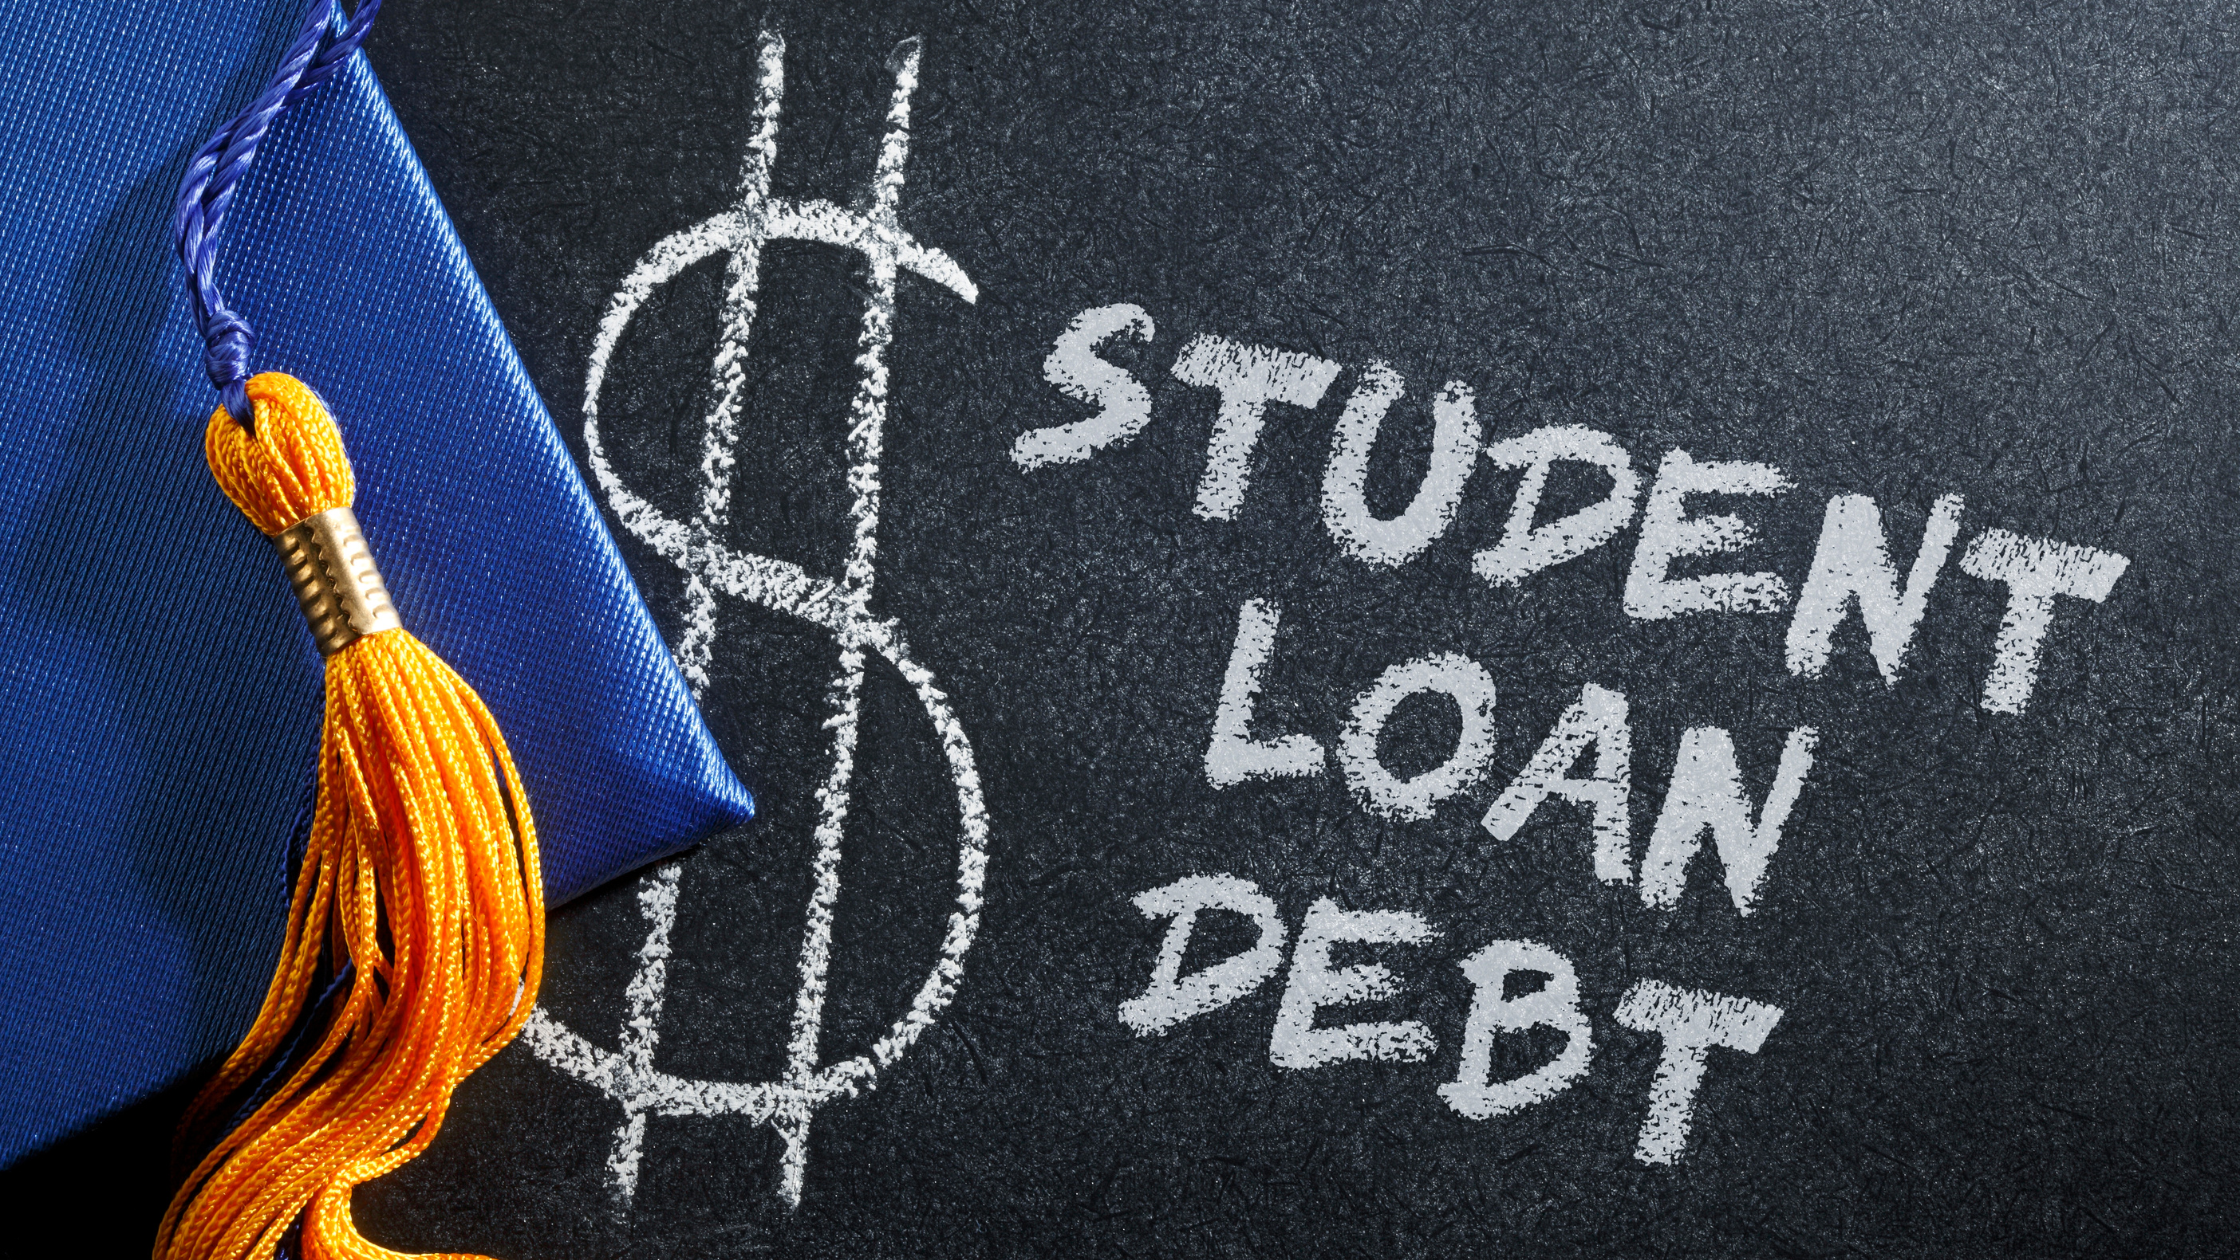 Does student debt affect affordability?